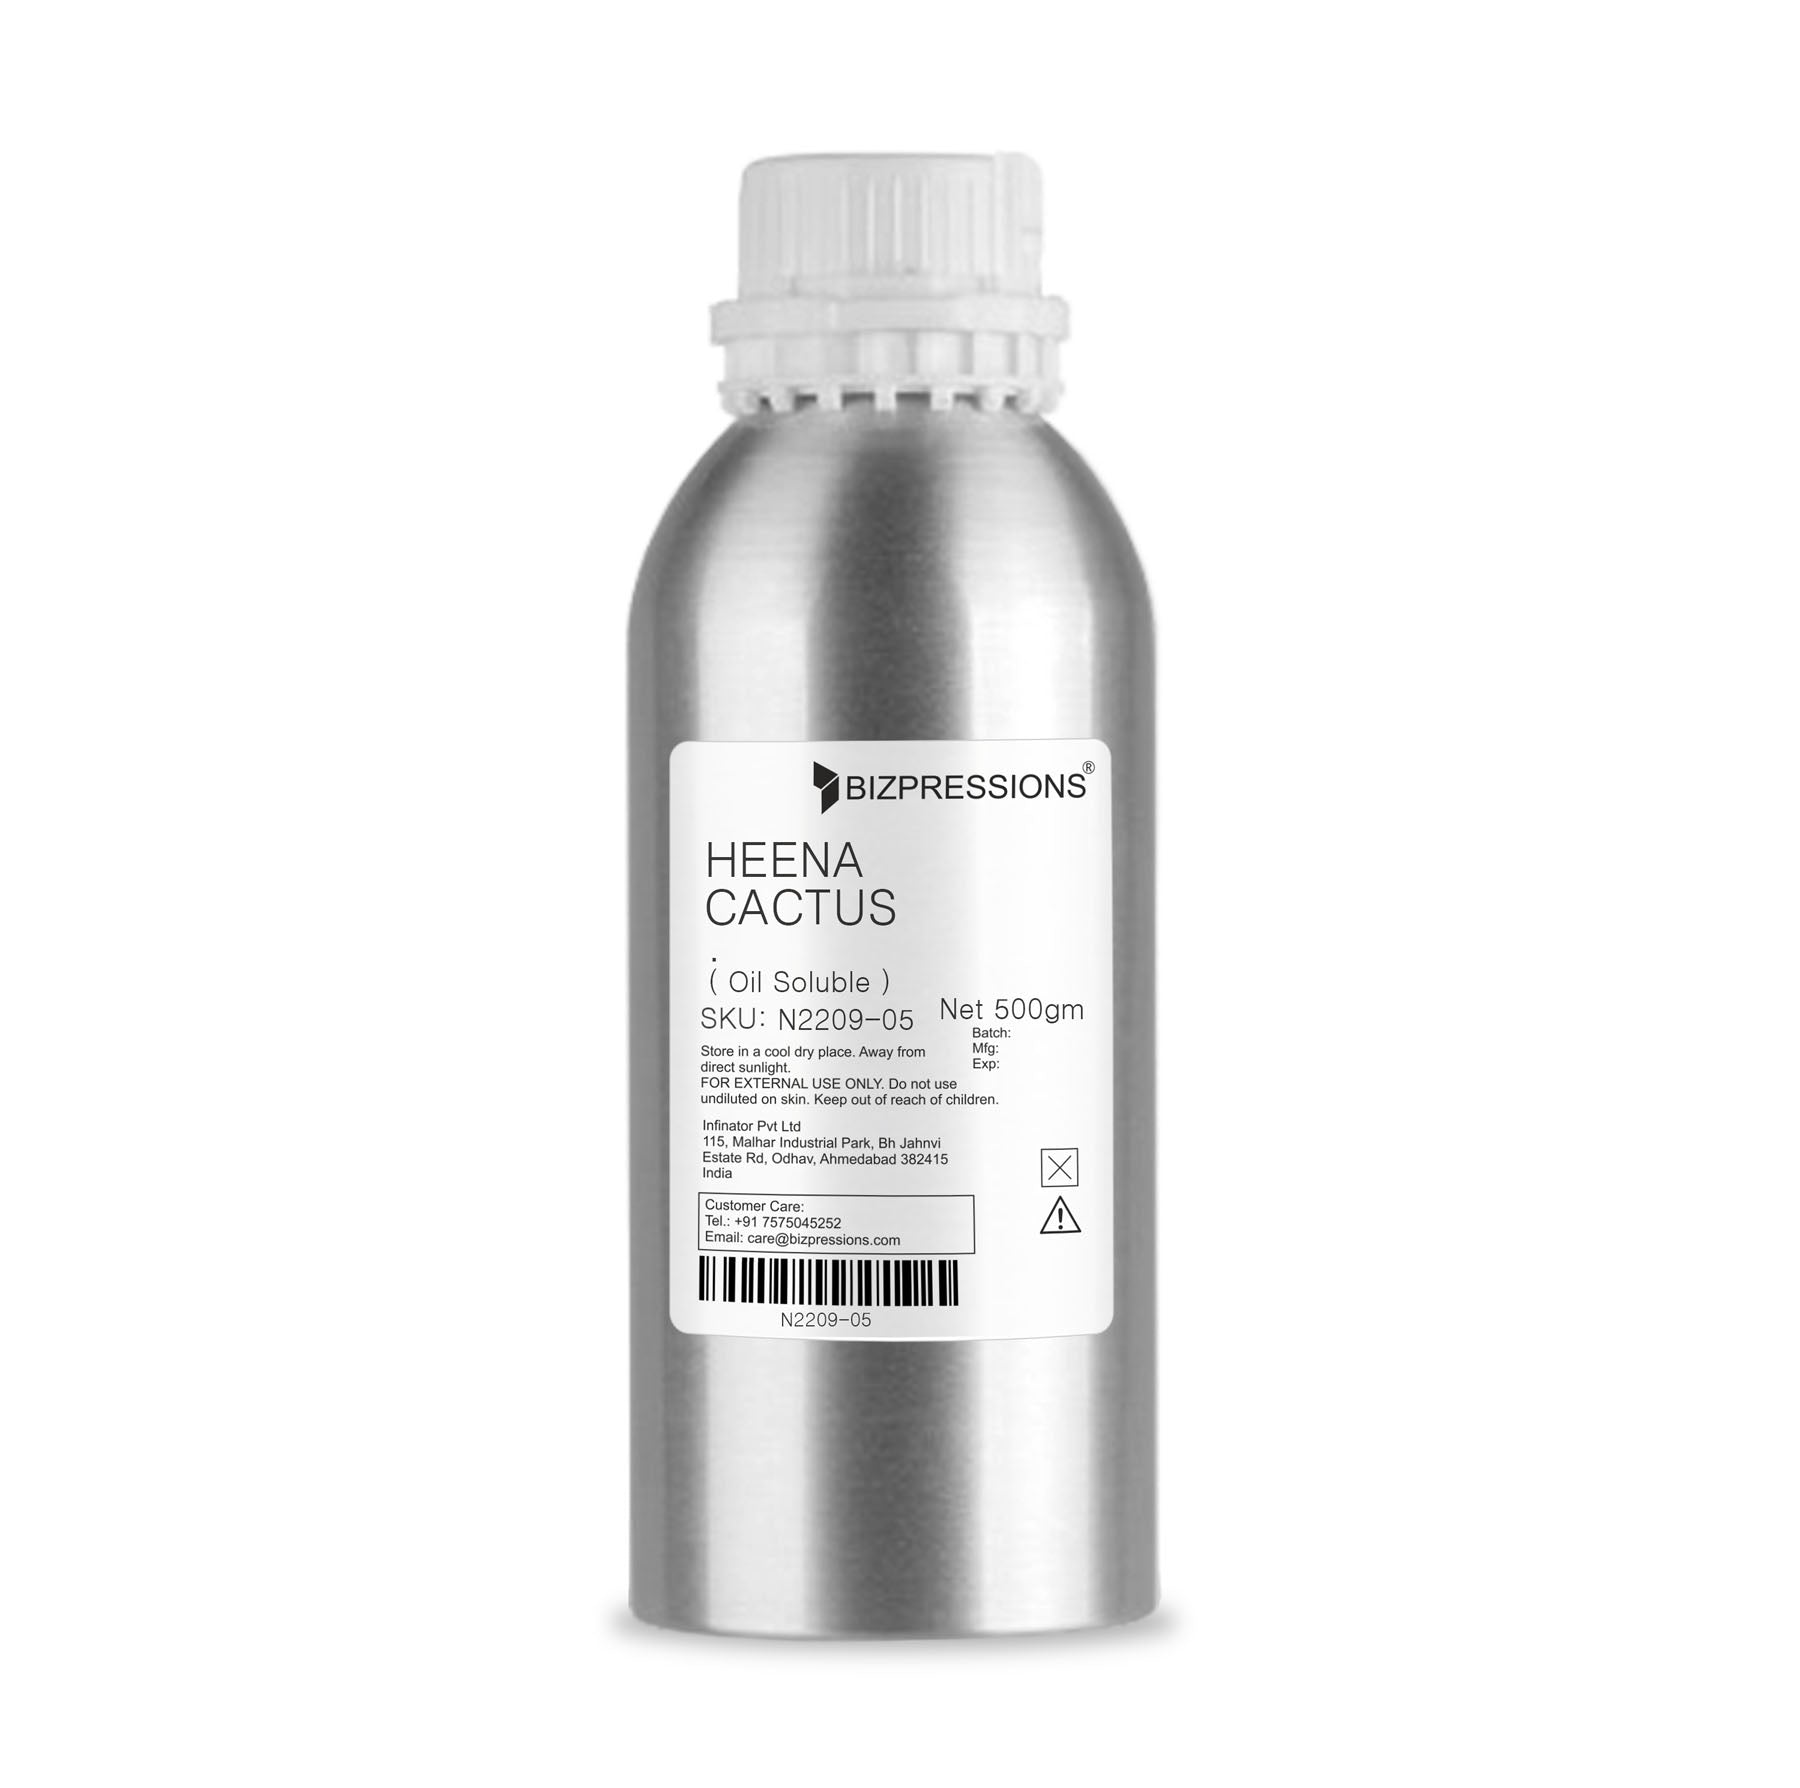 HEENA CACTUS - Fragrance ( Oil Soluble ) - 500 gm